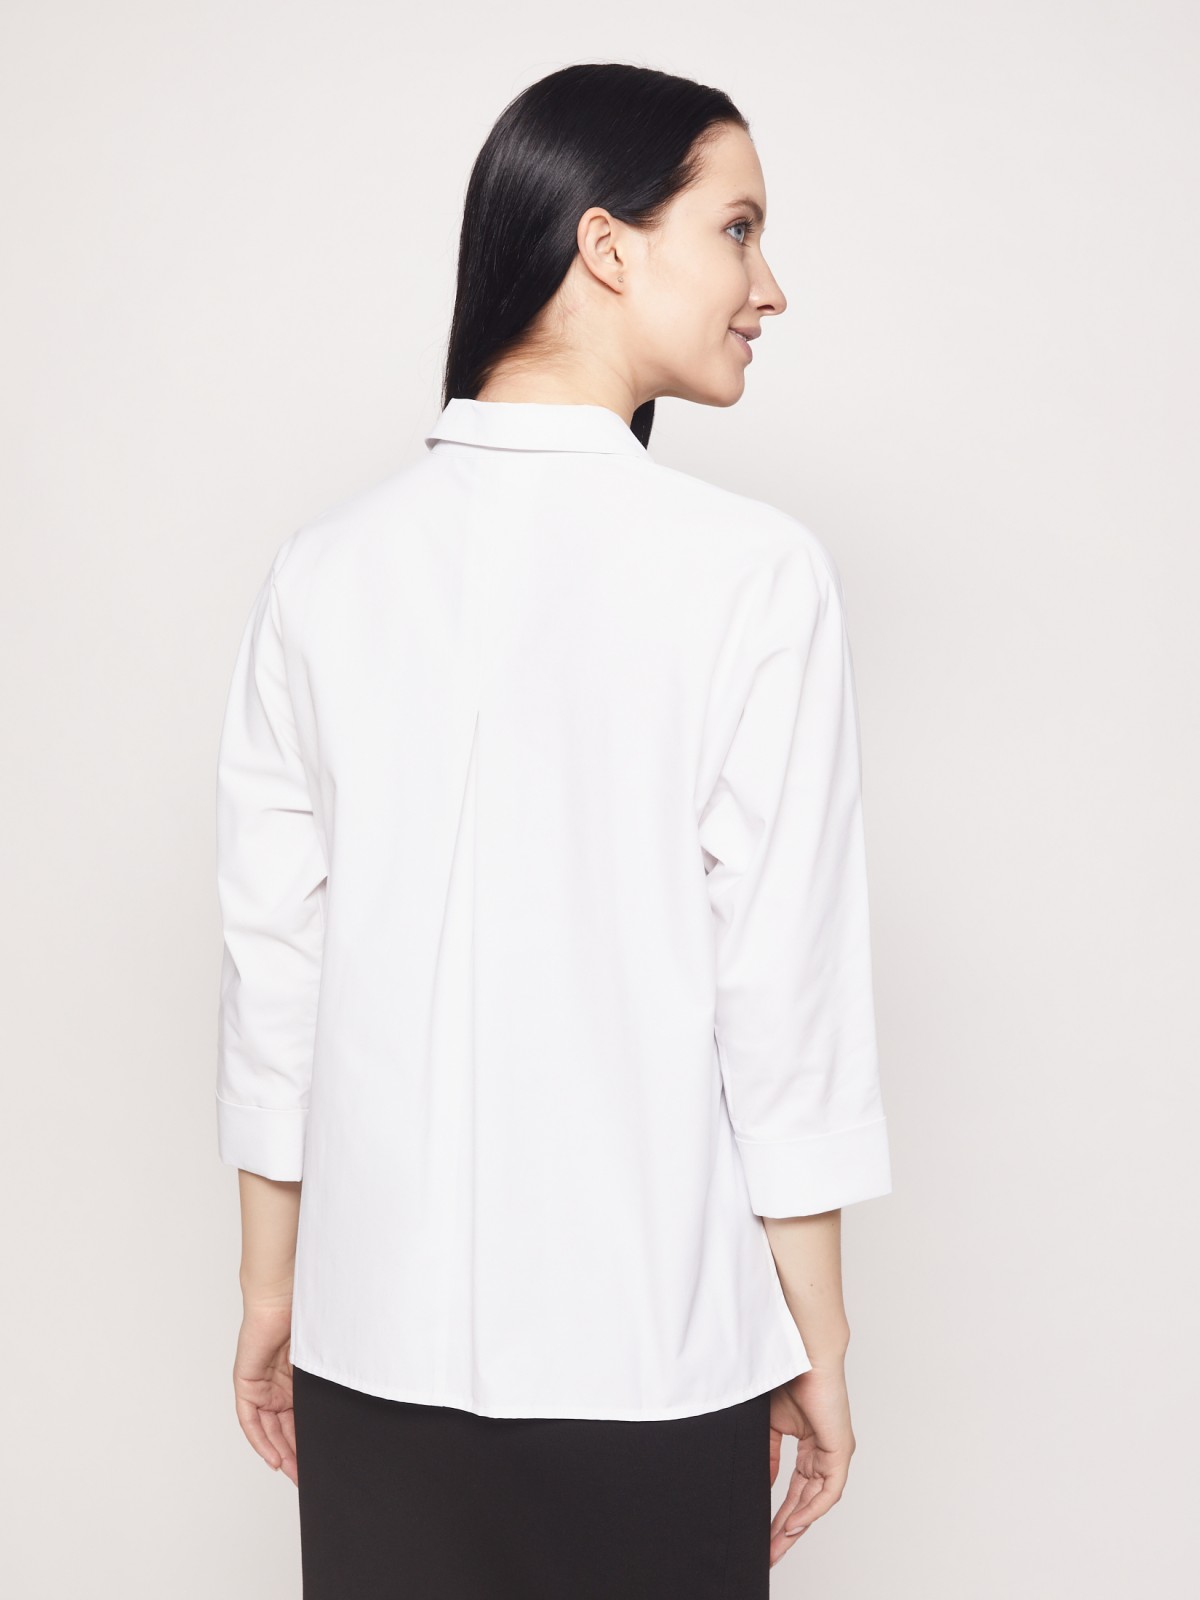 Рубашка с декоративной брошью zolla 221311159123, цвет белый, размер XS - фото 6